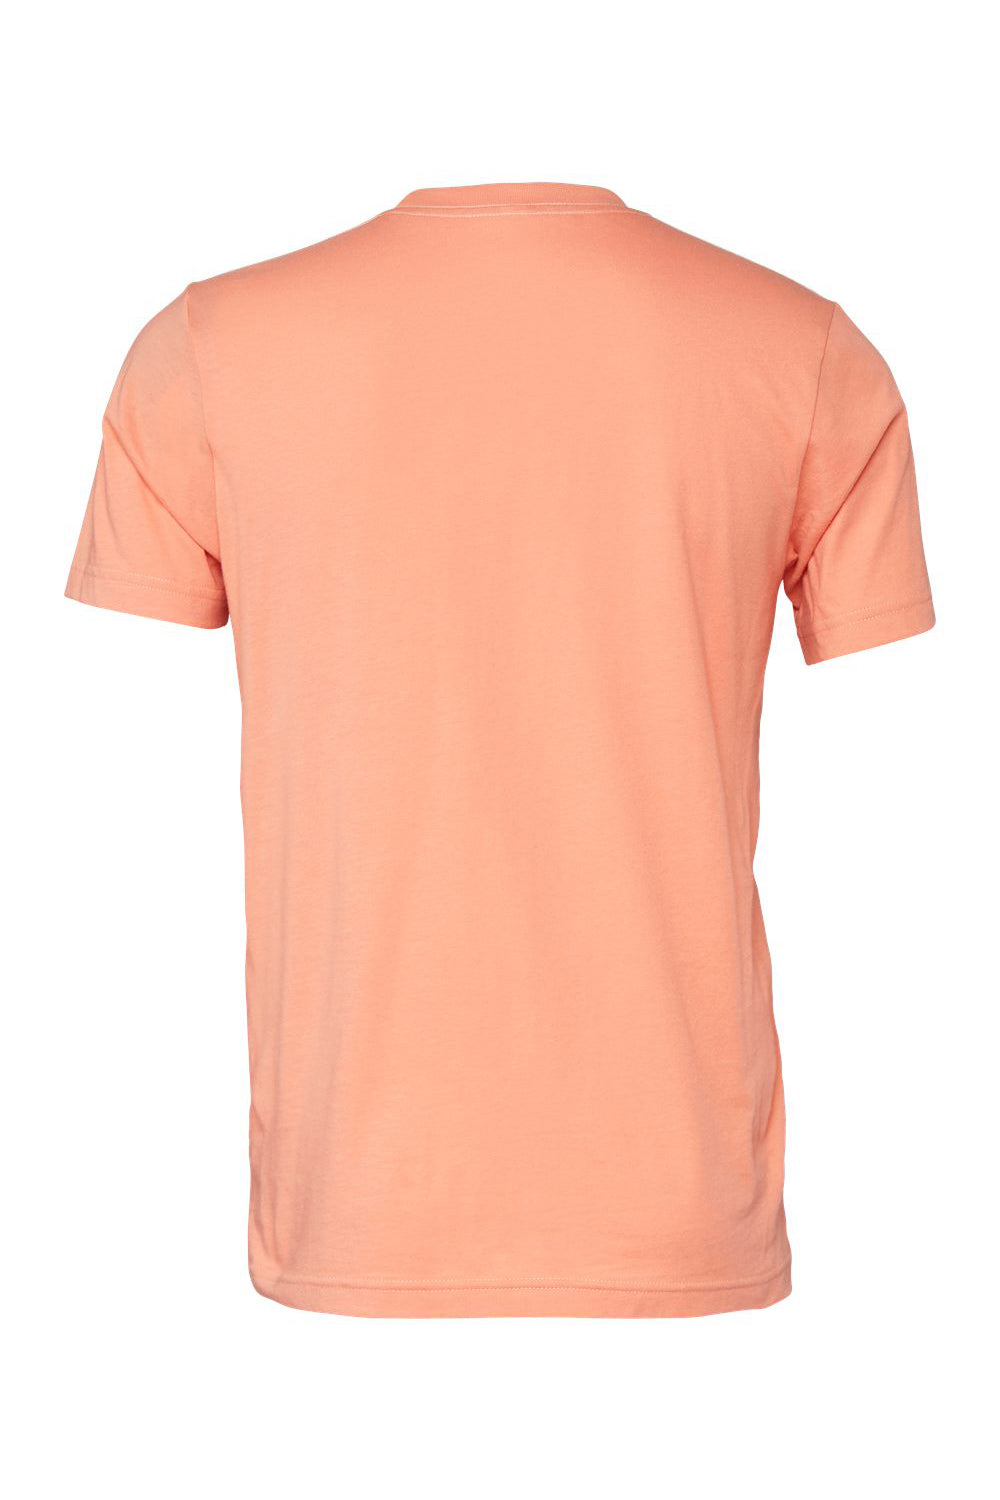 Bella + Canvas BC3001/3001C Mens Jersey Short Sleeve Crewneck T-Shirt Sunset Orange Flat Back